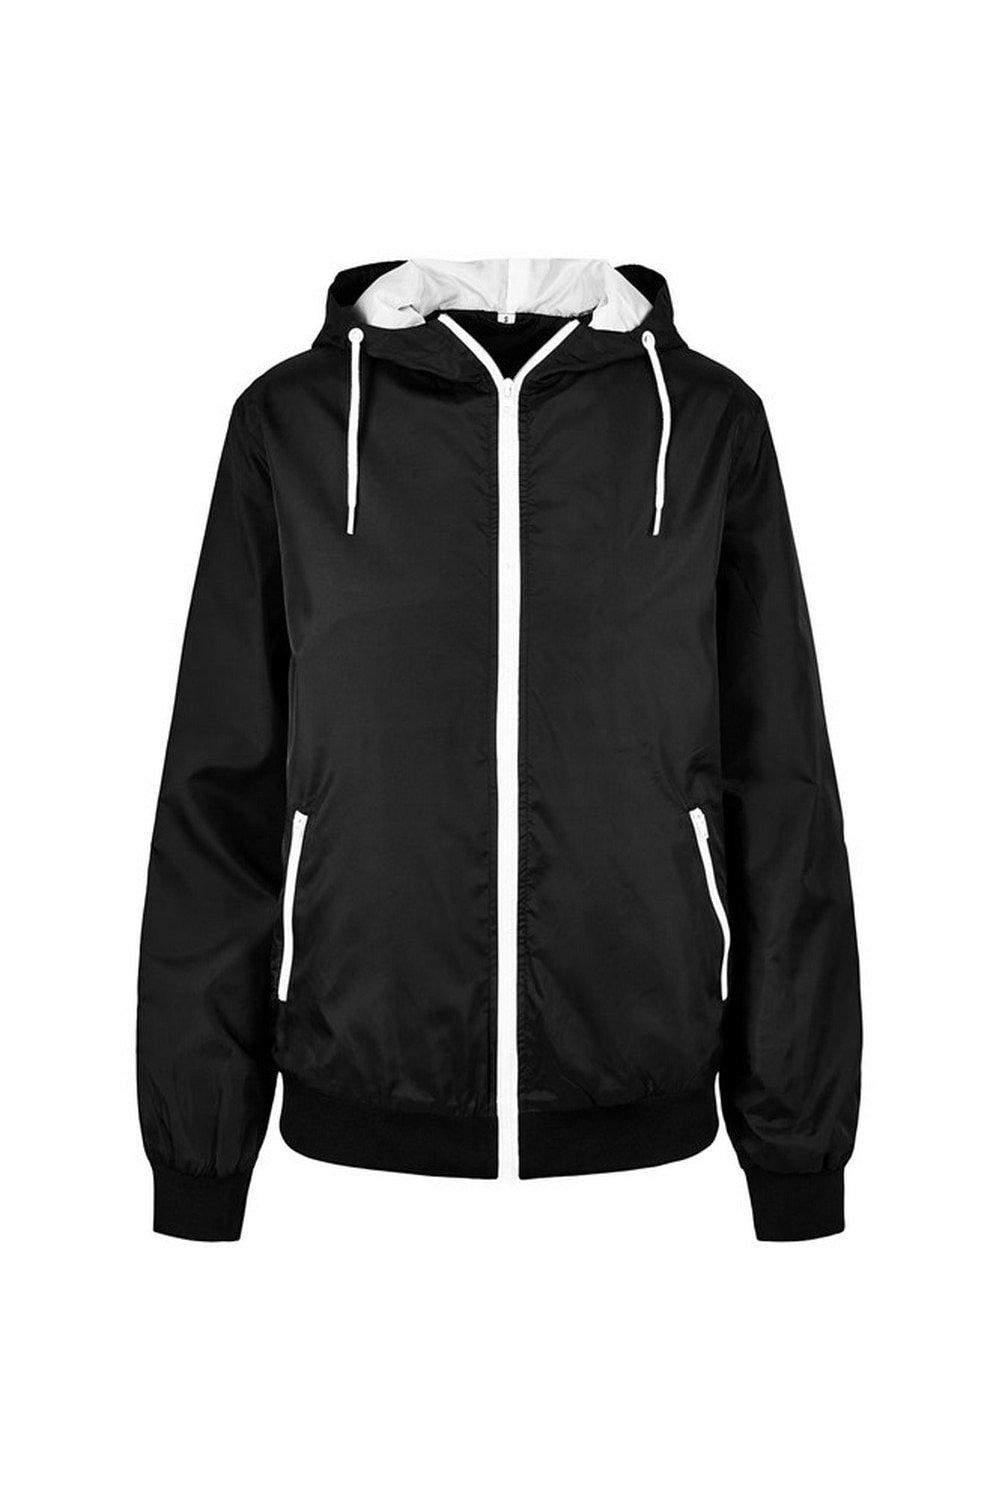 Двухцветная куртка Windrunner Build Your Brand, черный